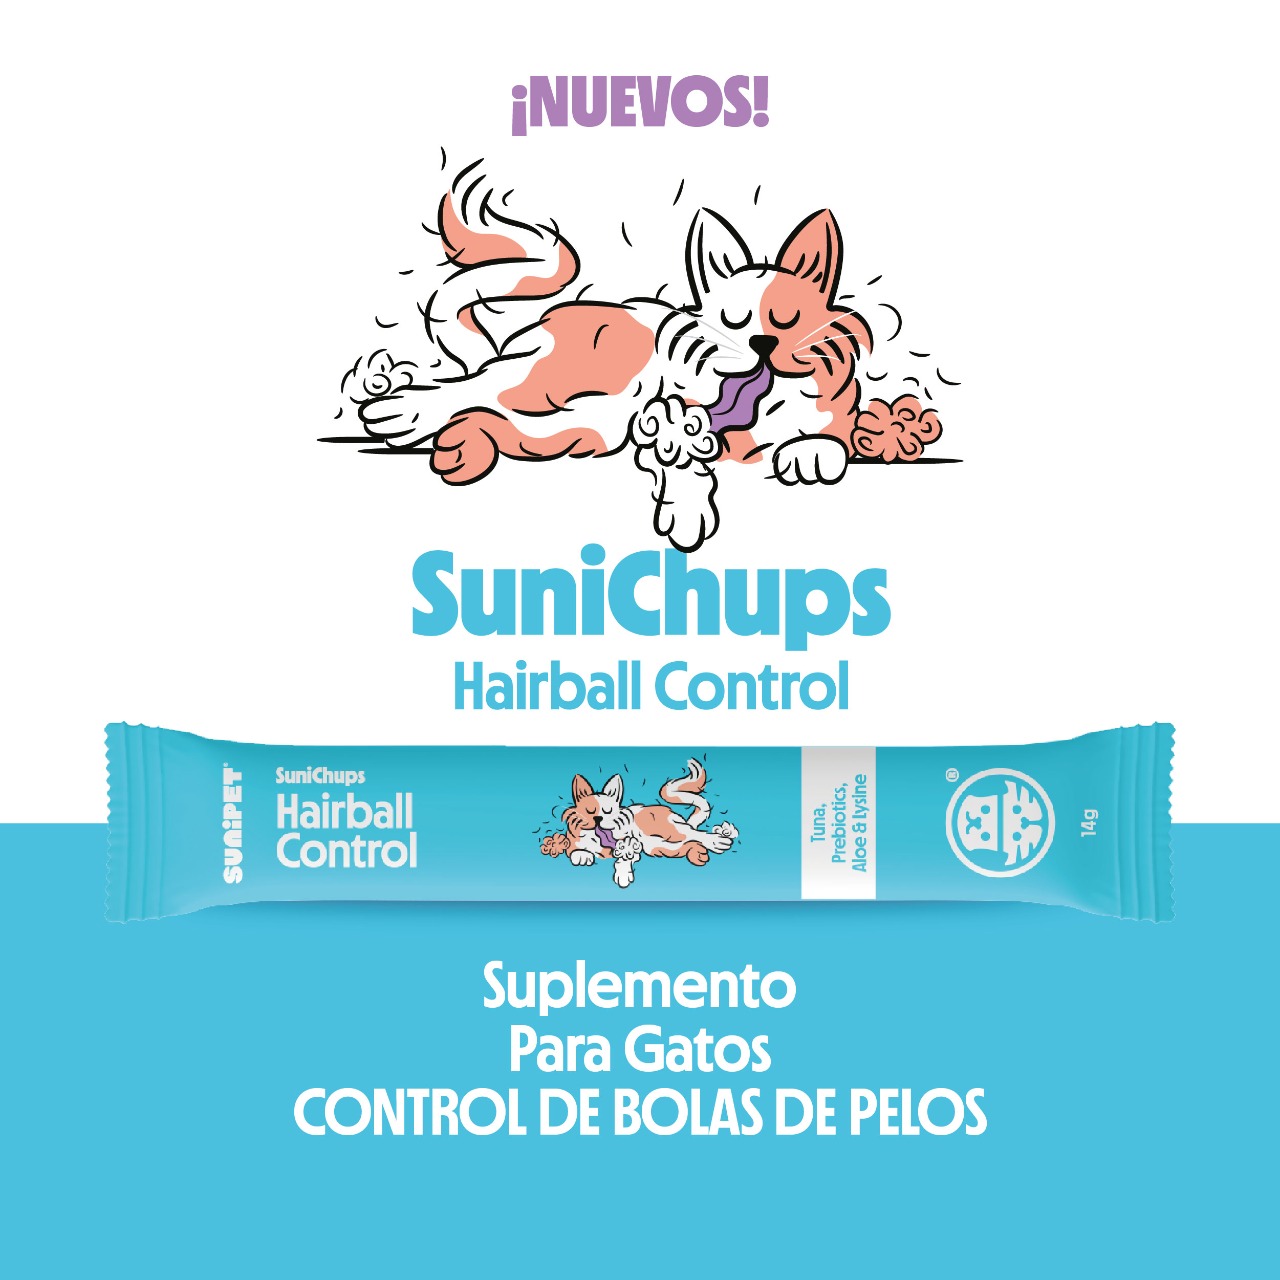 Sunichups Hairball Control 4 tubos